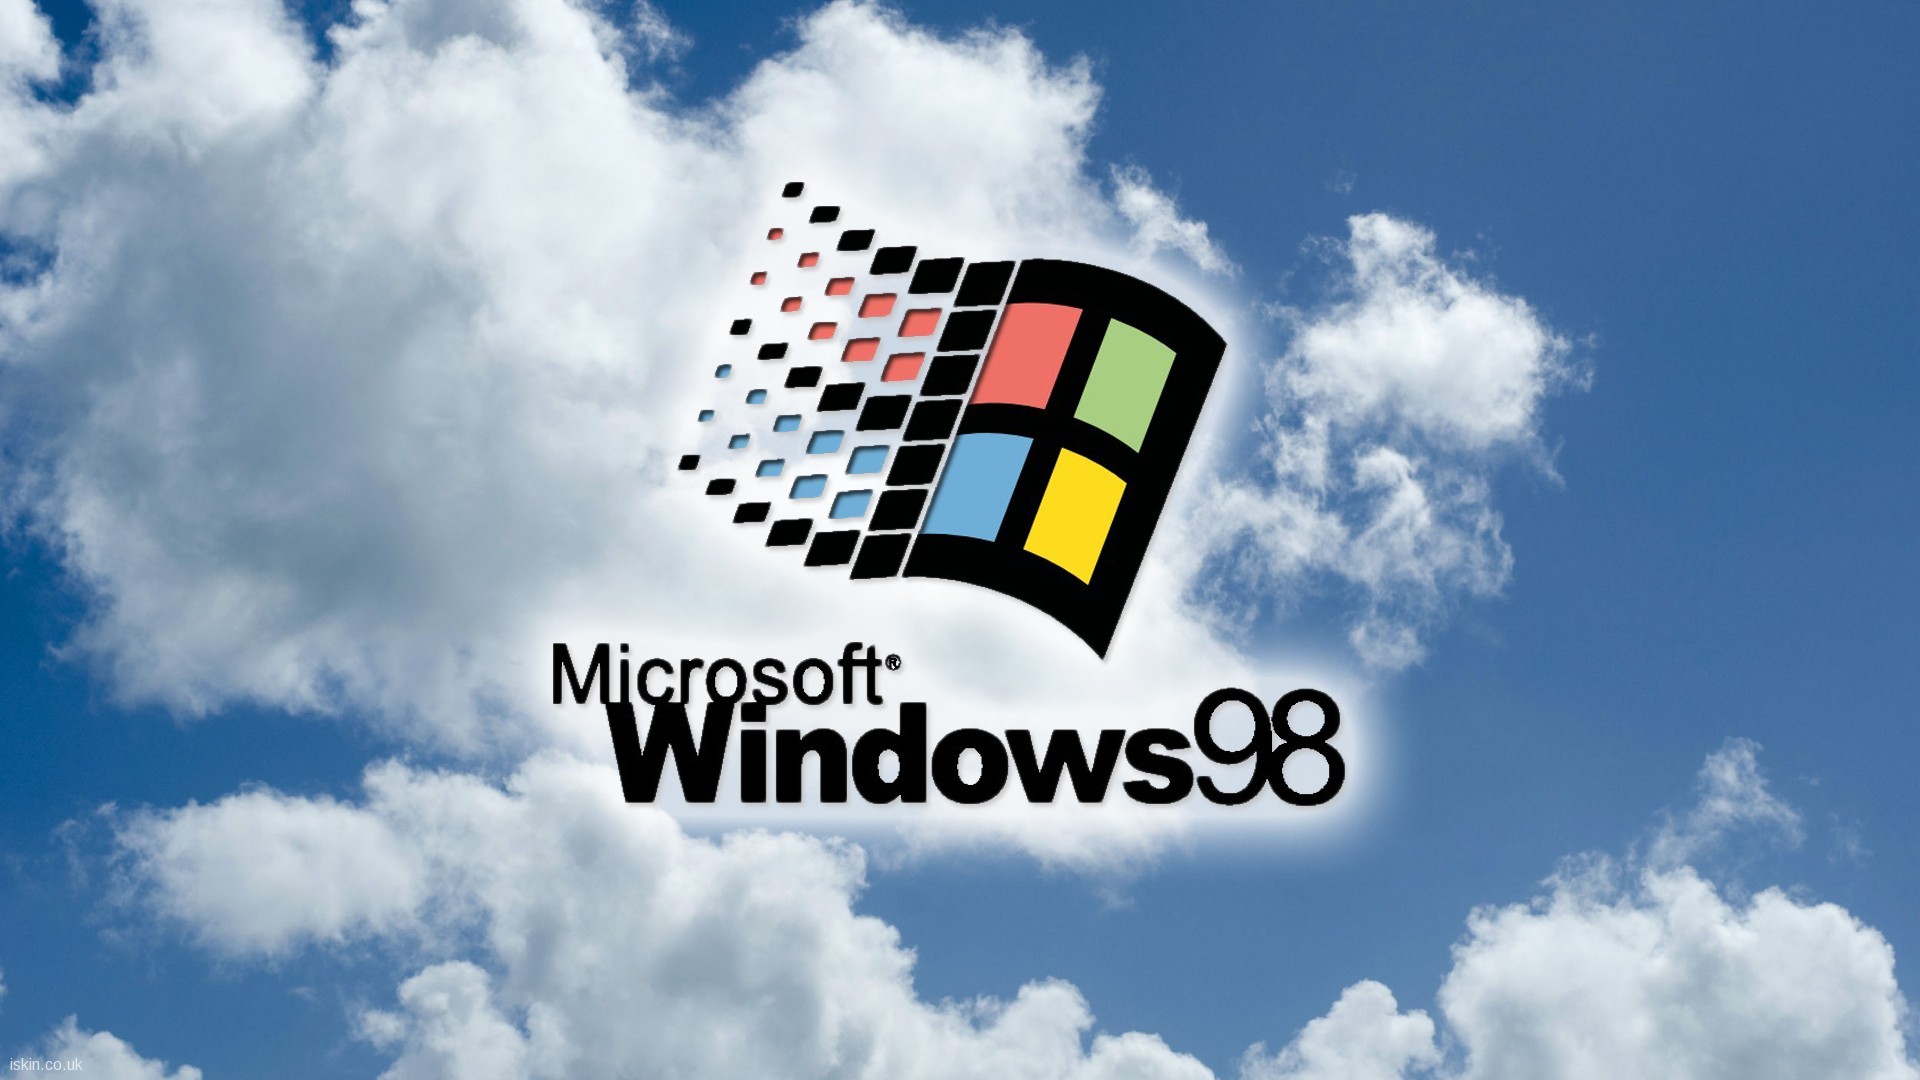 Windows 98 Logo wallpaper – 626438